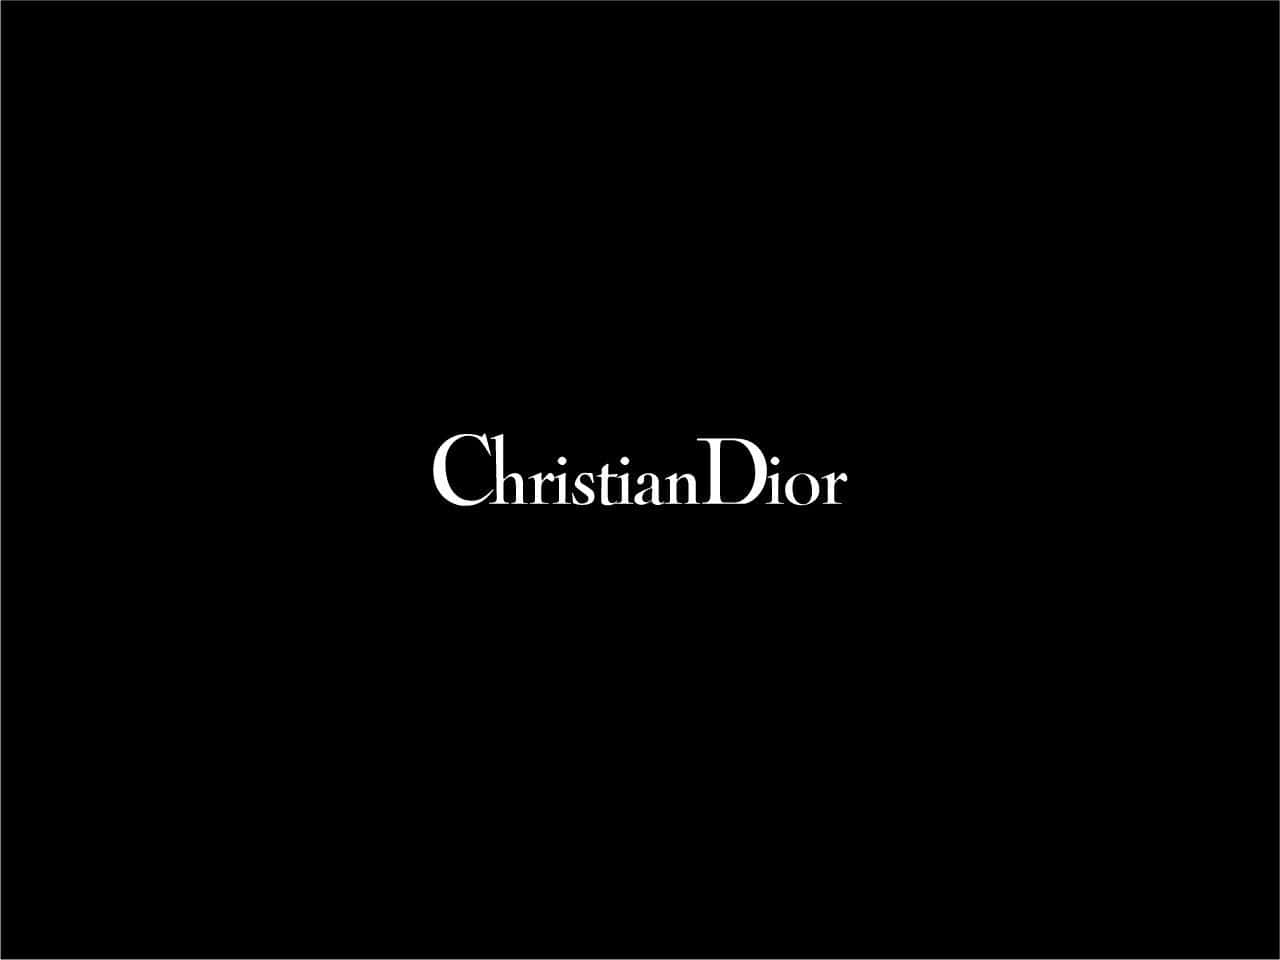 Christian Dior Logo On A Black Background